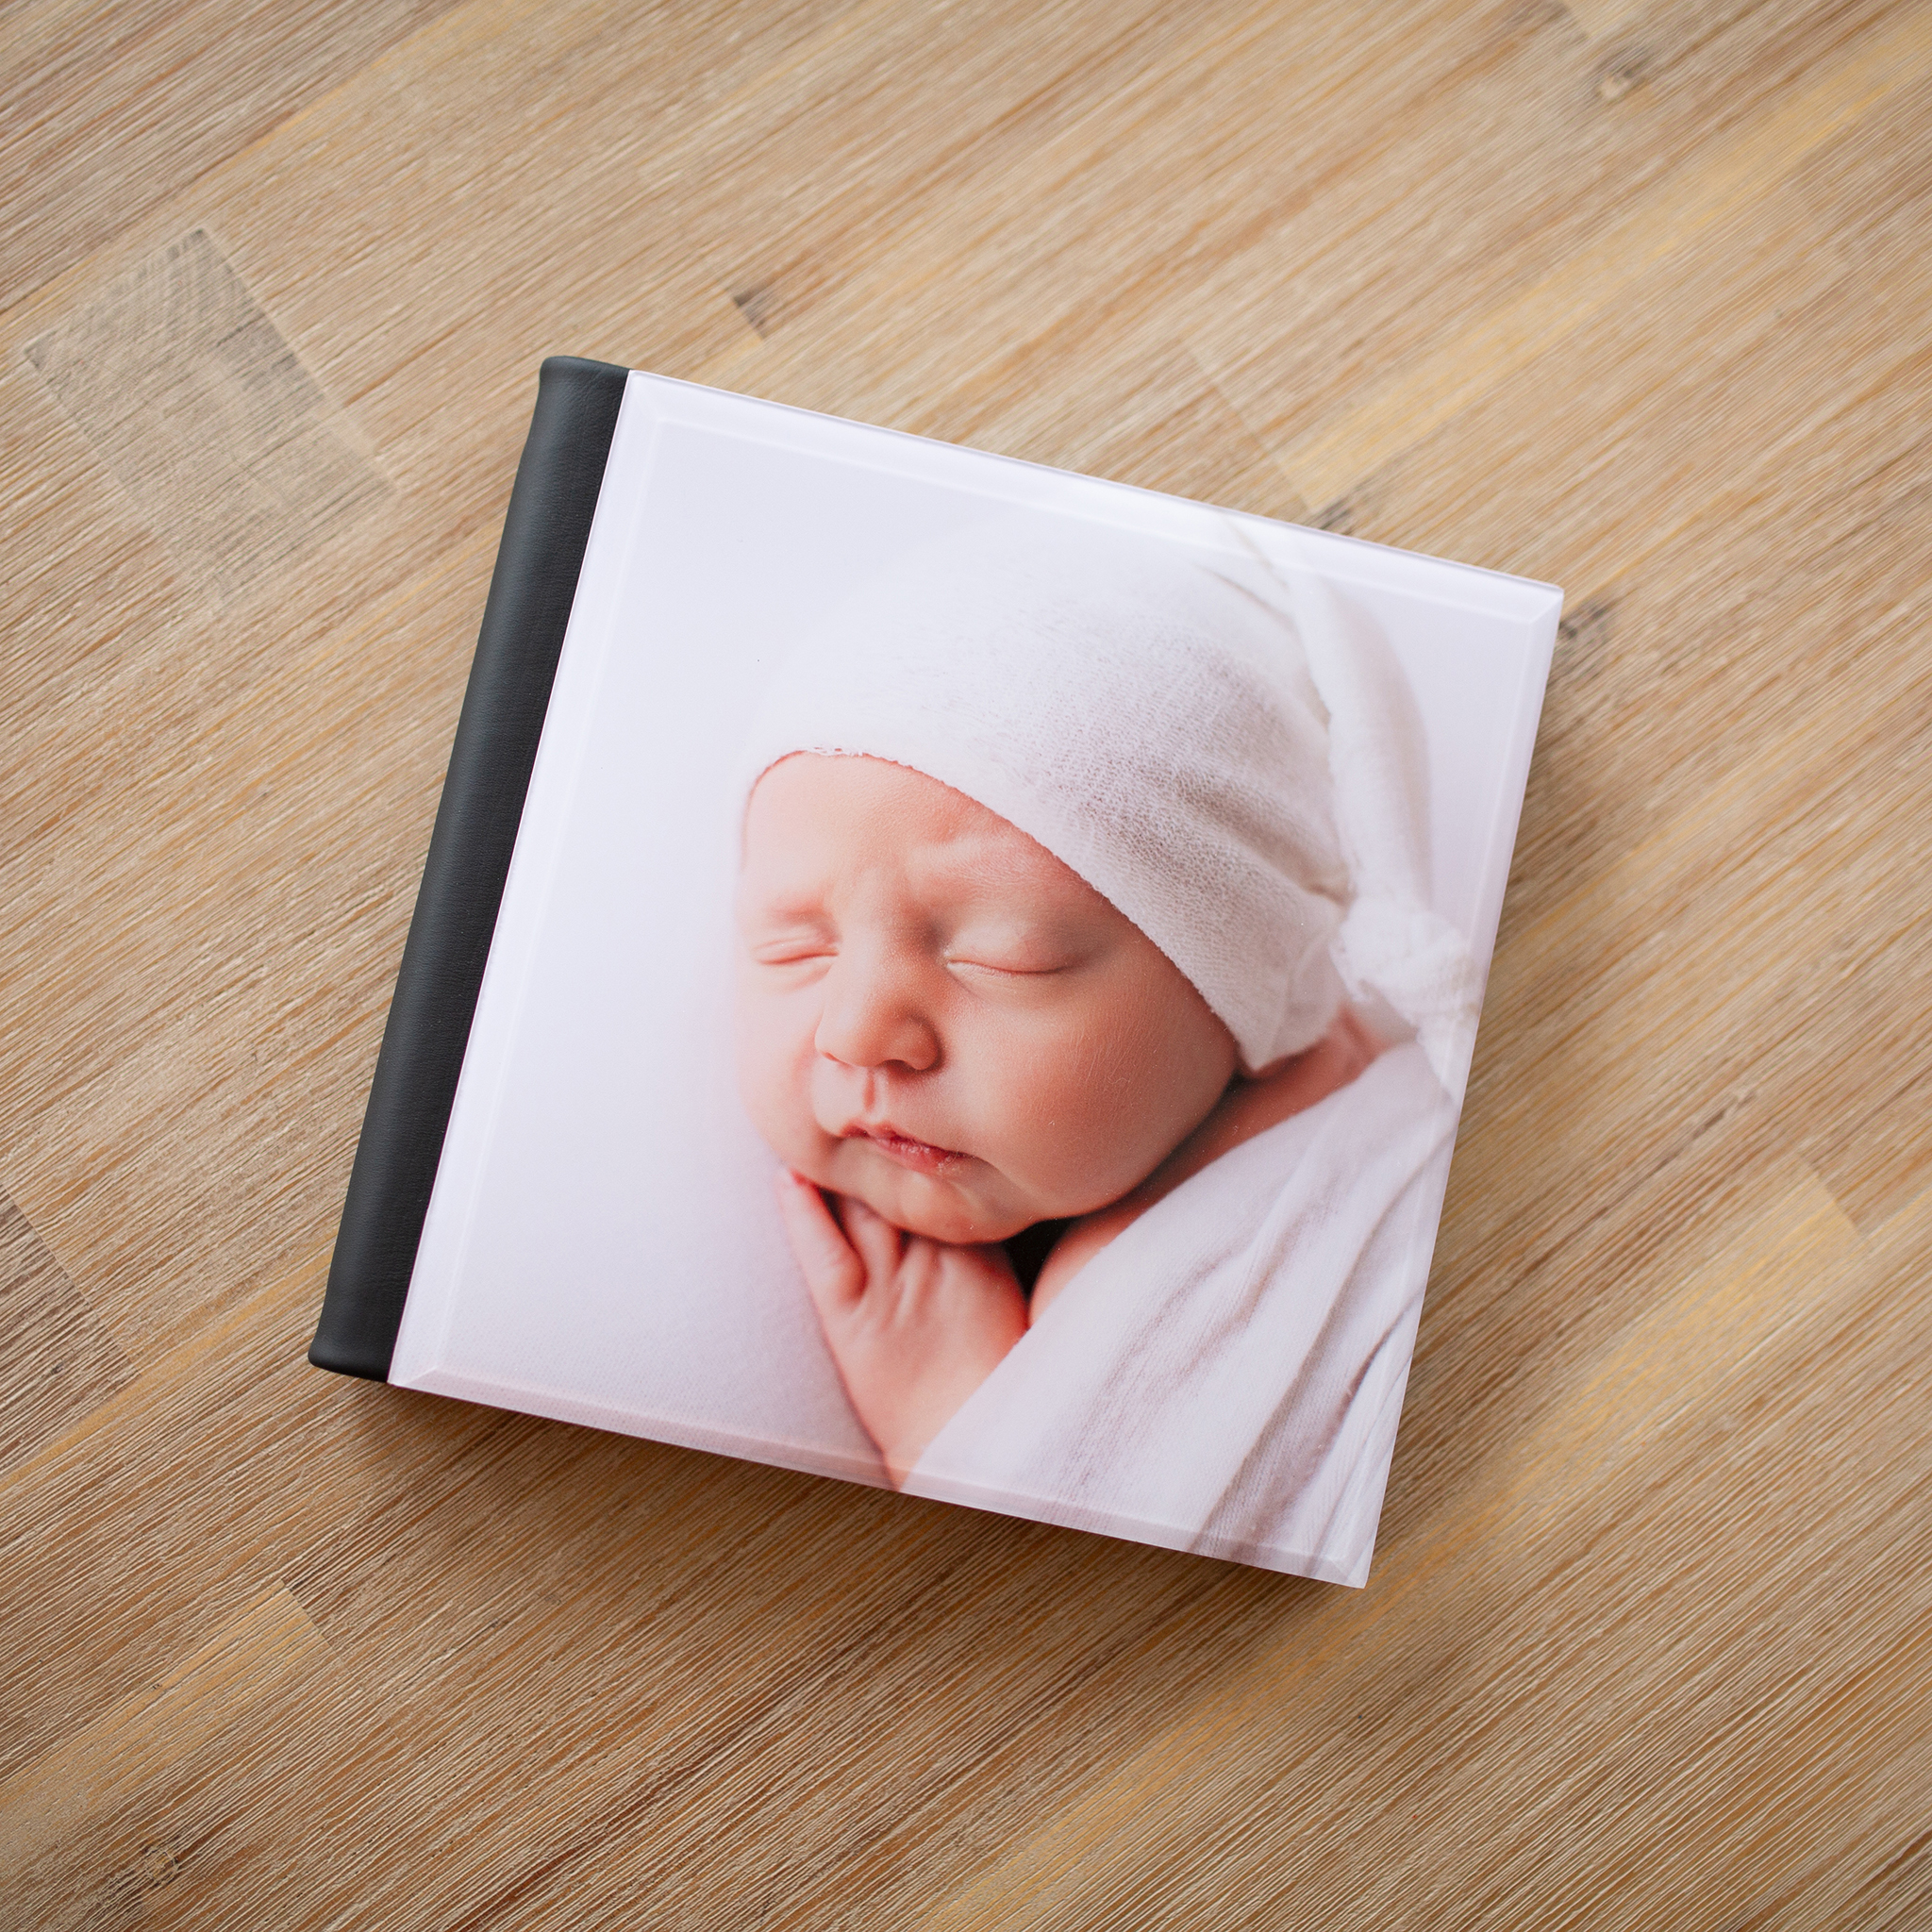 perryville missouri newborn photographer, Jackson Missouri newborn photographer, album, baby on book, wood table, Cape Girardeau newborn photographer